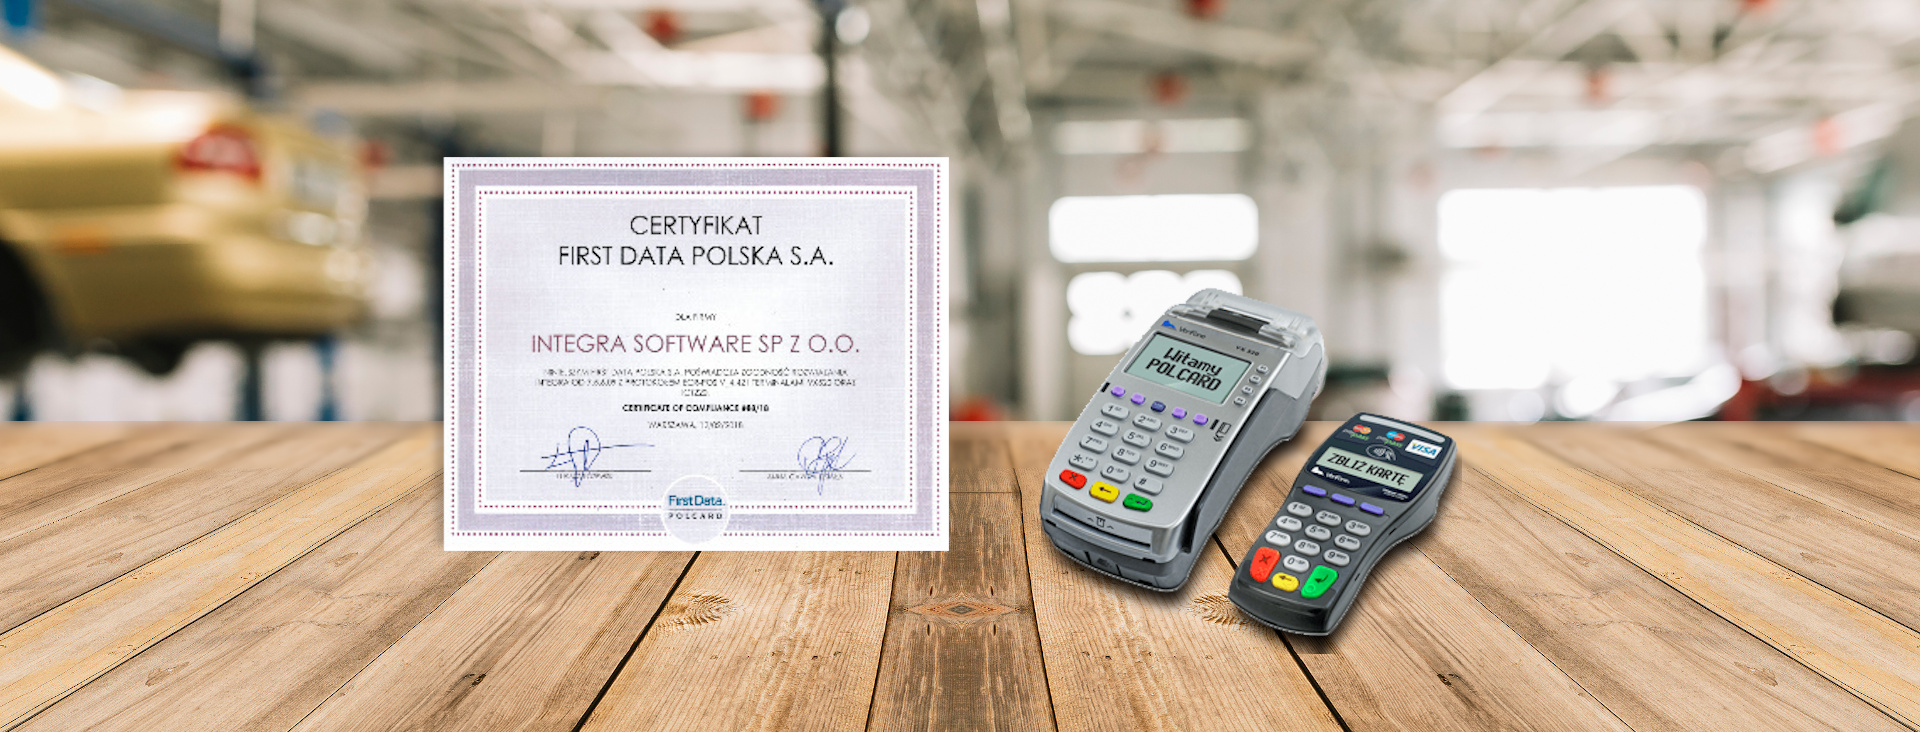 Certyfikat first data polcard dla integra